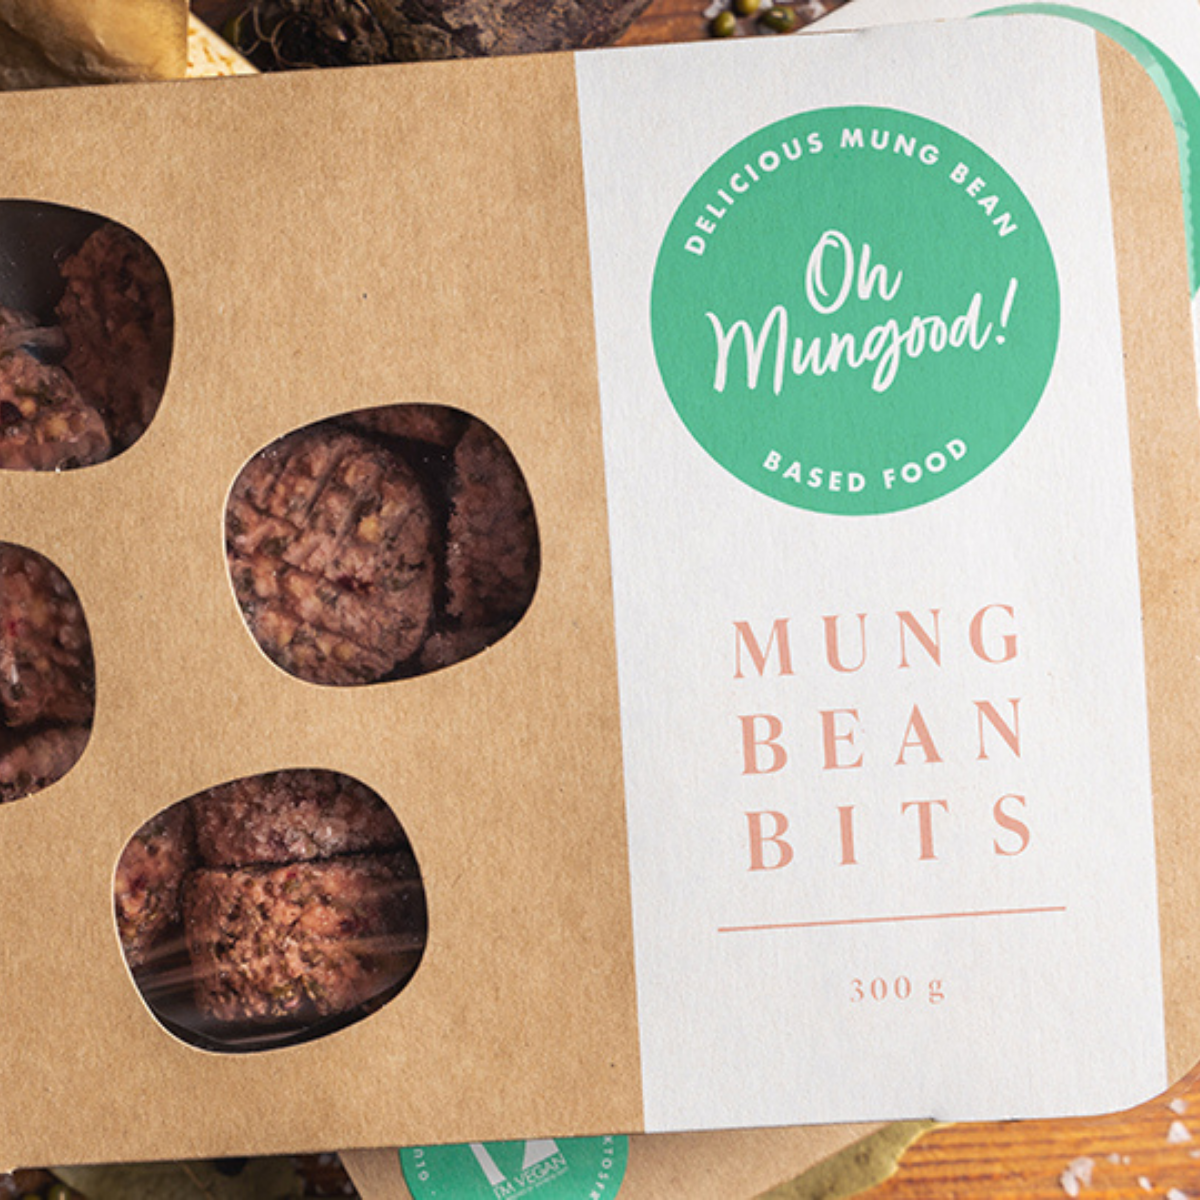 OMG Plantbased Food - Oh Mungood's Oh Mungoods Mundbisse